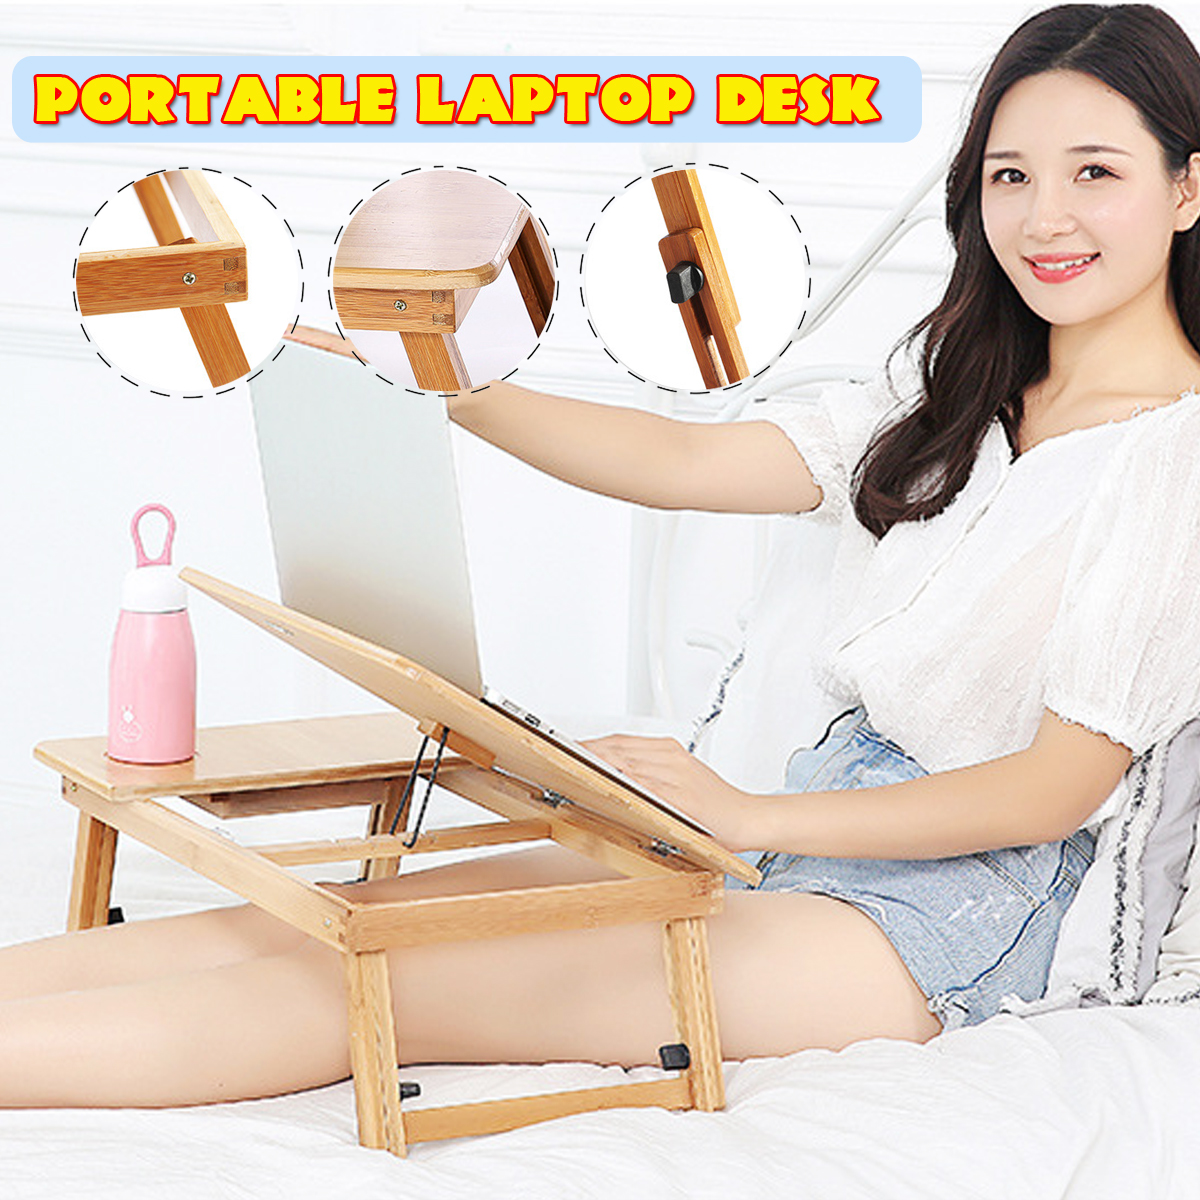 Adjustable-Laptop-Desk-Large-Bed-Tray-Tilting-Top-Foldable-Table-Multi-tasking-Stand-Breakfast-Servi-1547679-1